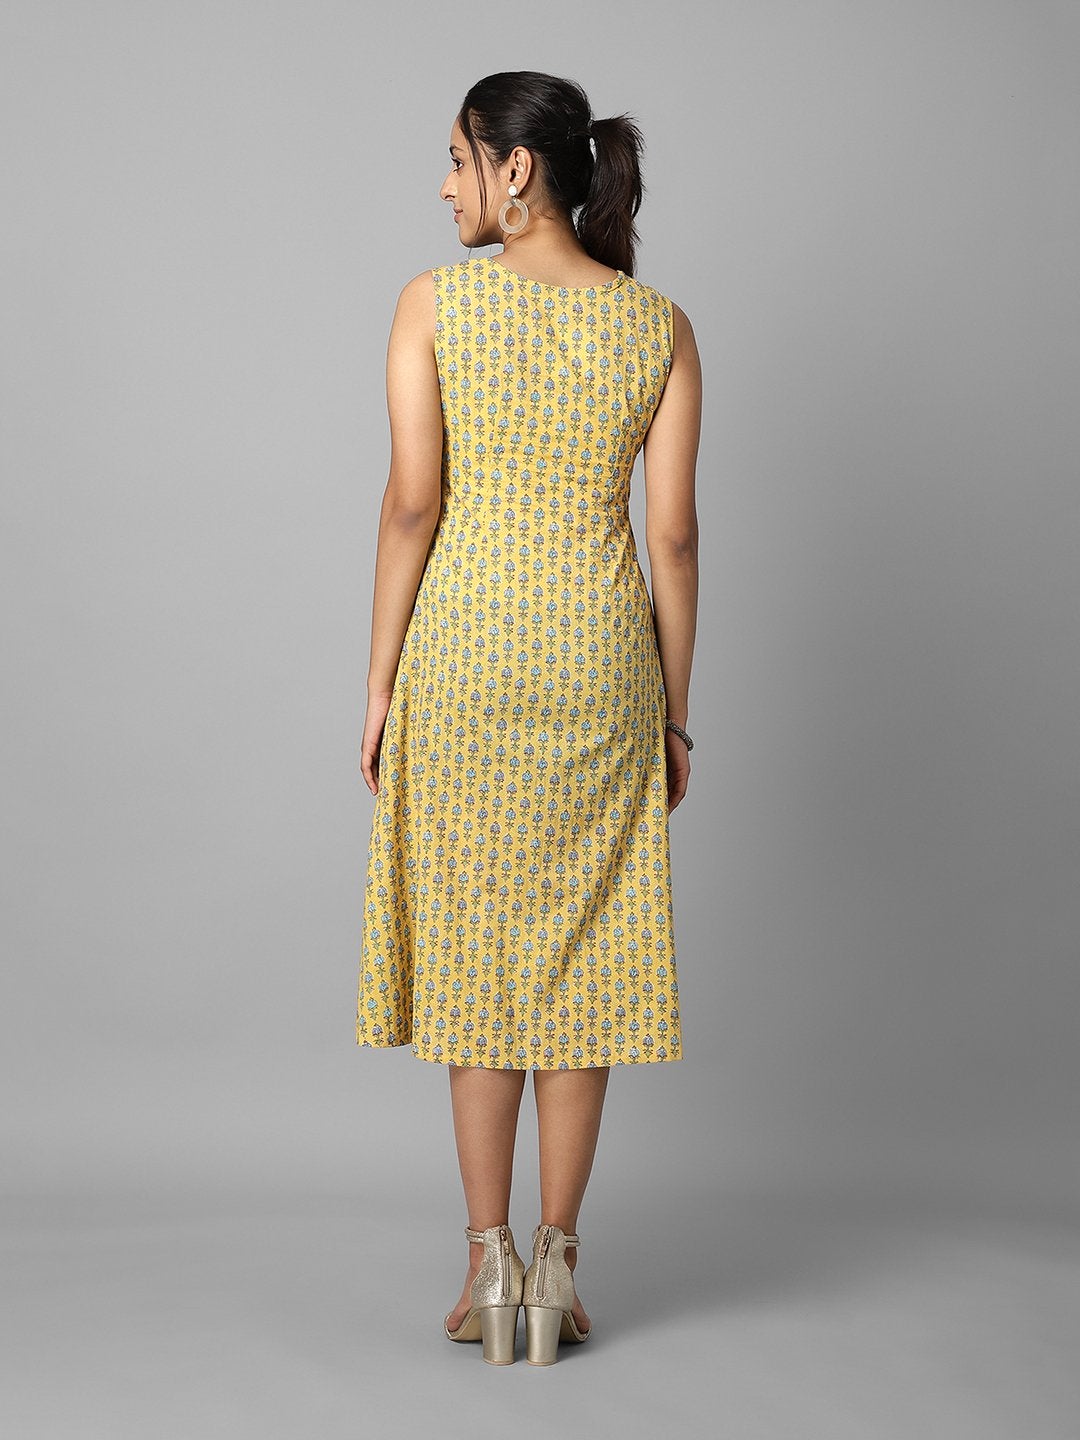 Women's Yellow Ethnic Printed Button Down A-Line Dress - Azira